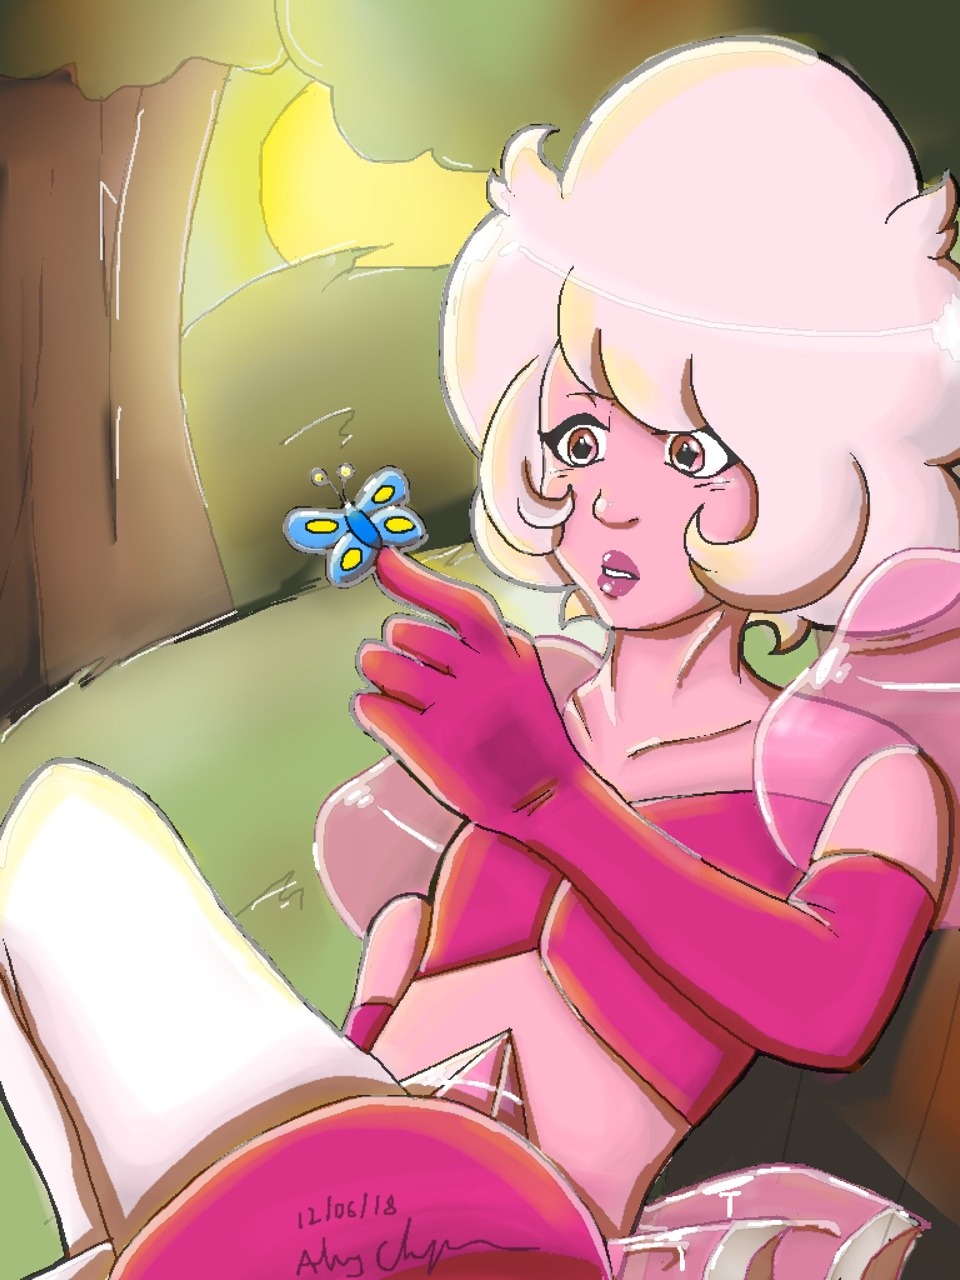 It’s been a long wait but I drew a curious Pink Diamond!